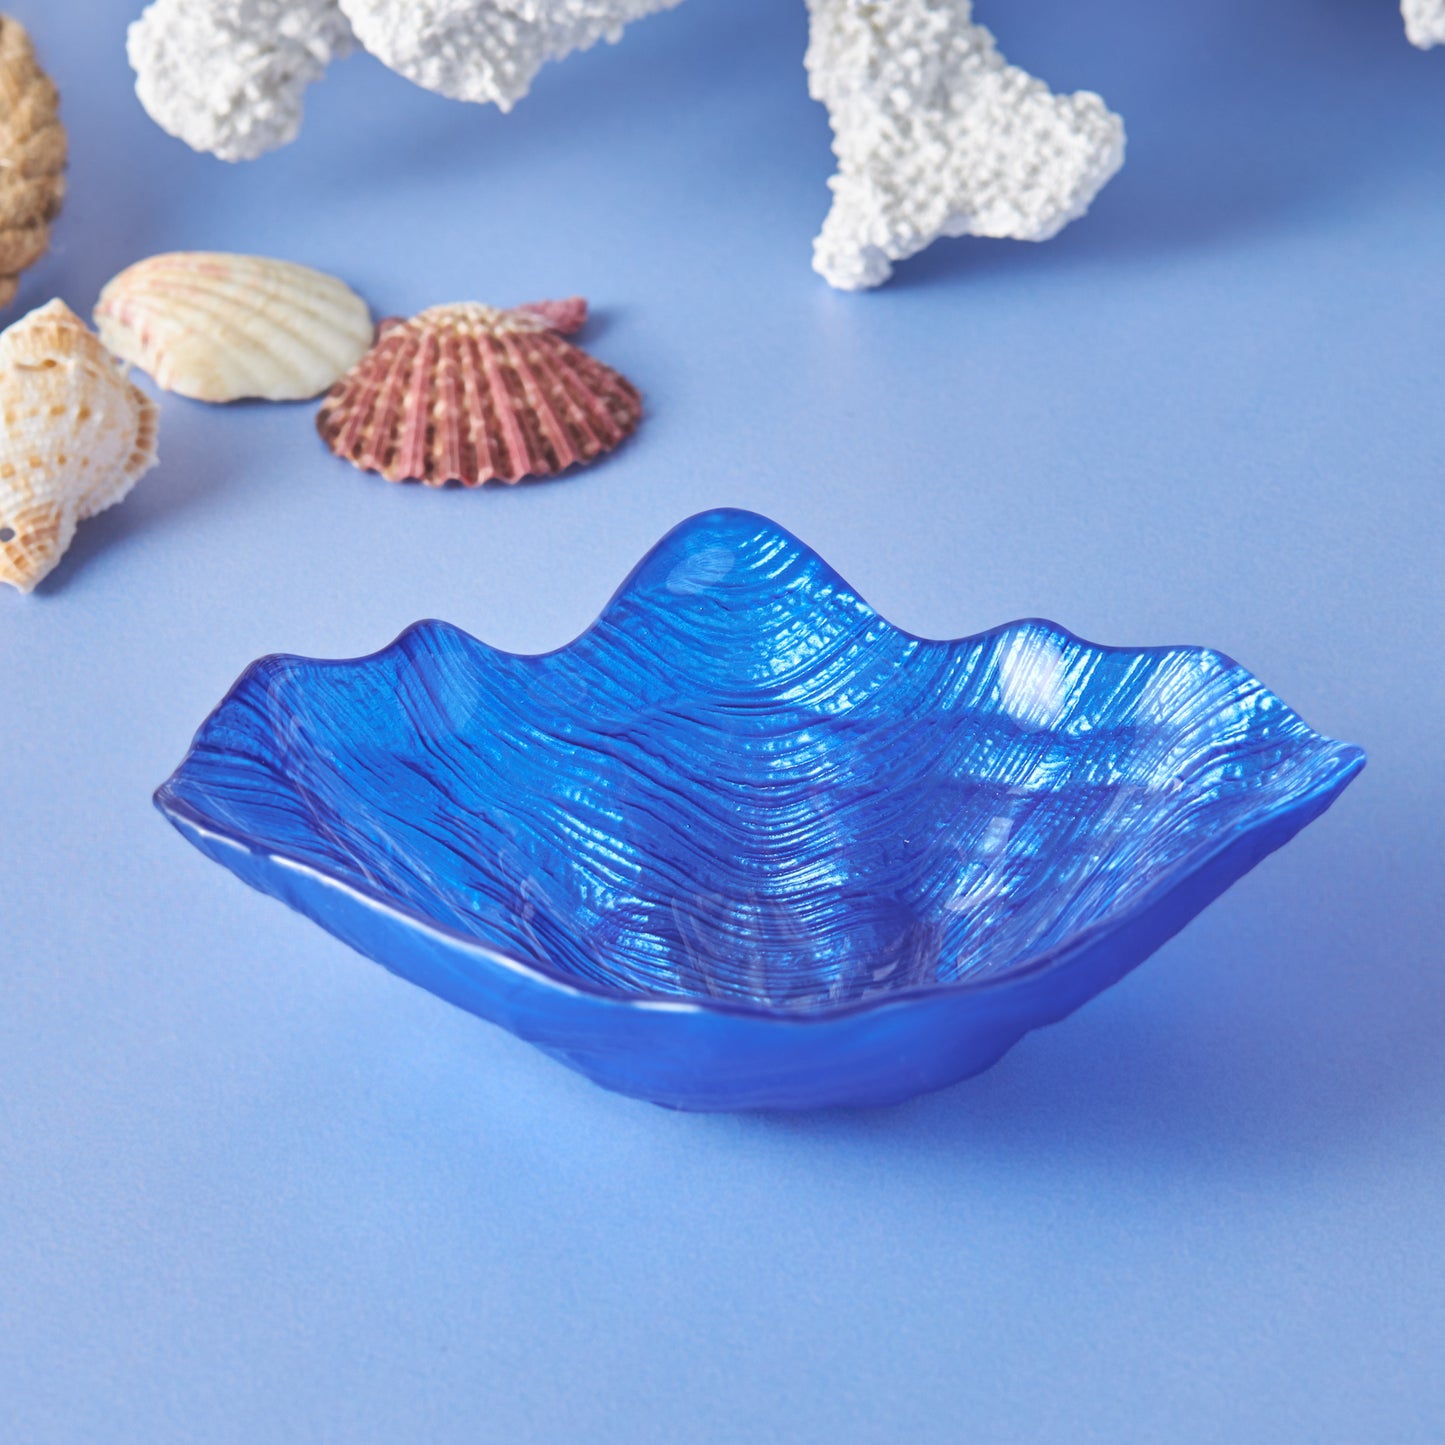 Bol pentru gustări Karaca Aqua Marine Oyster albastru, 15 cm